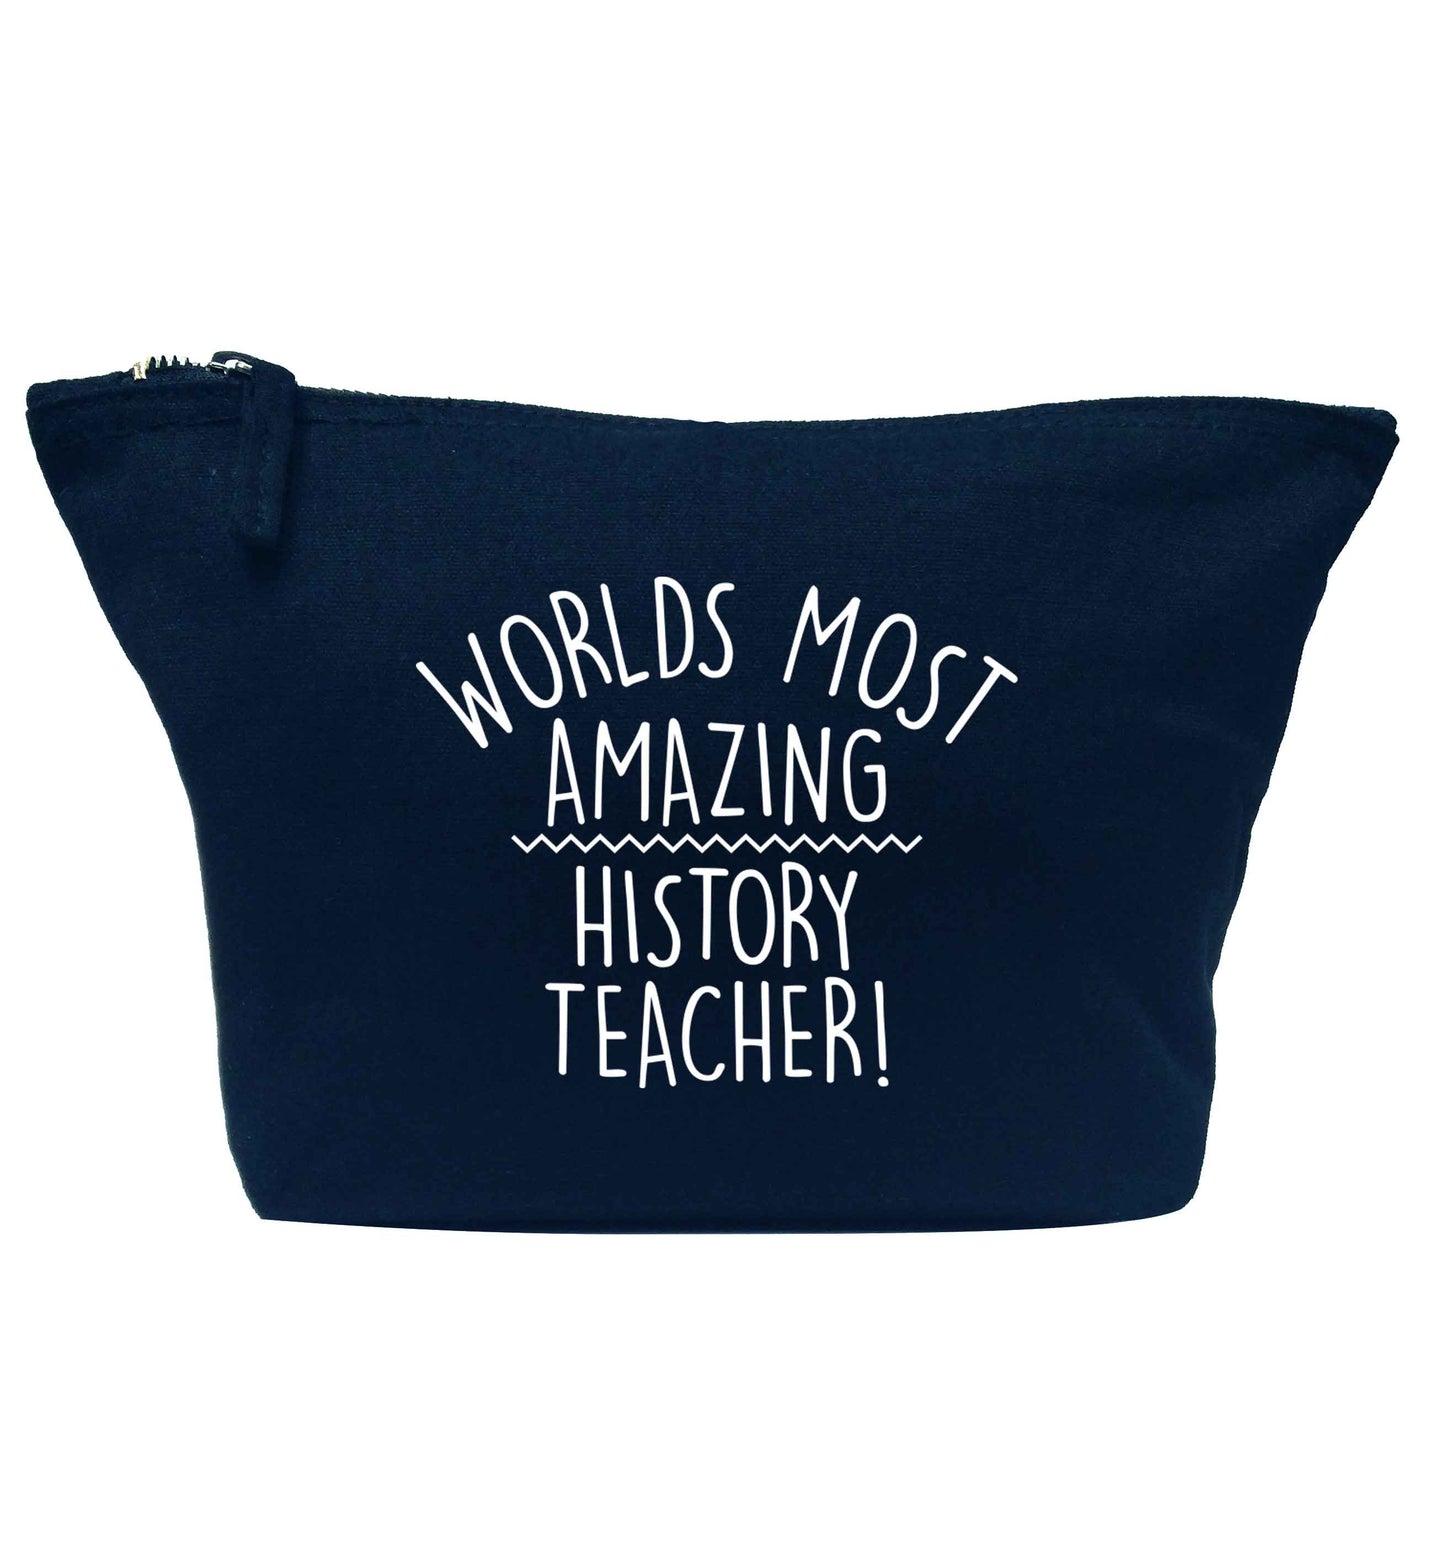 Worlds most amazing History teacher navy makeup bag